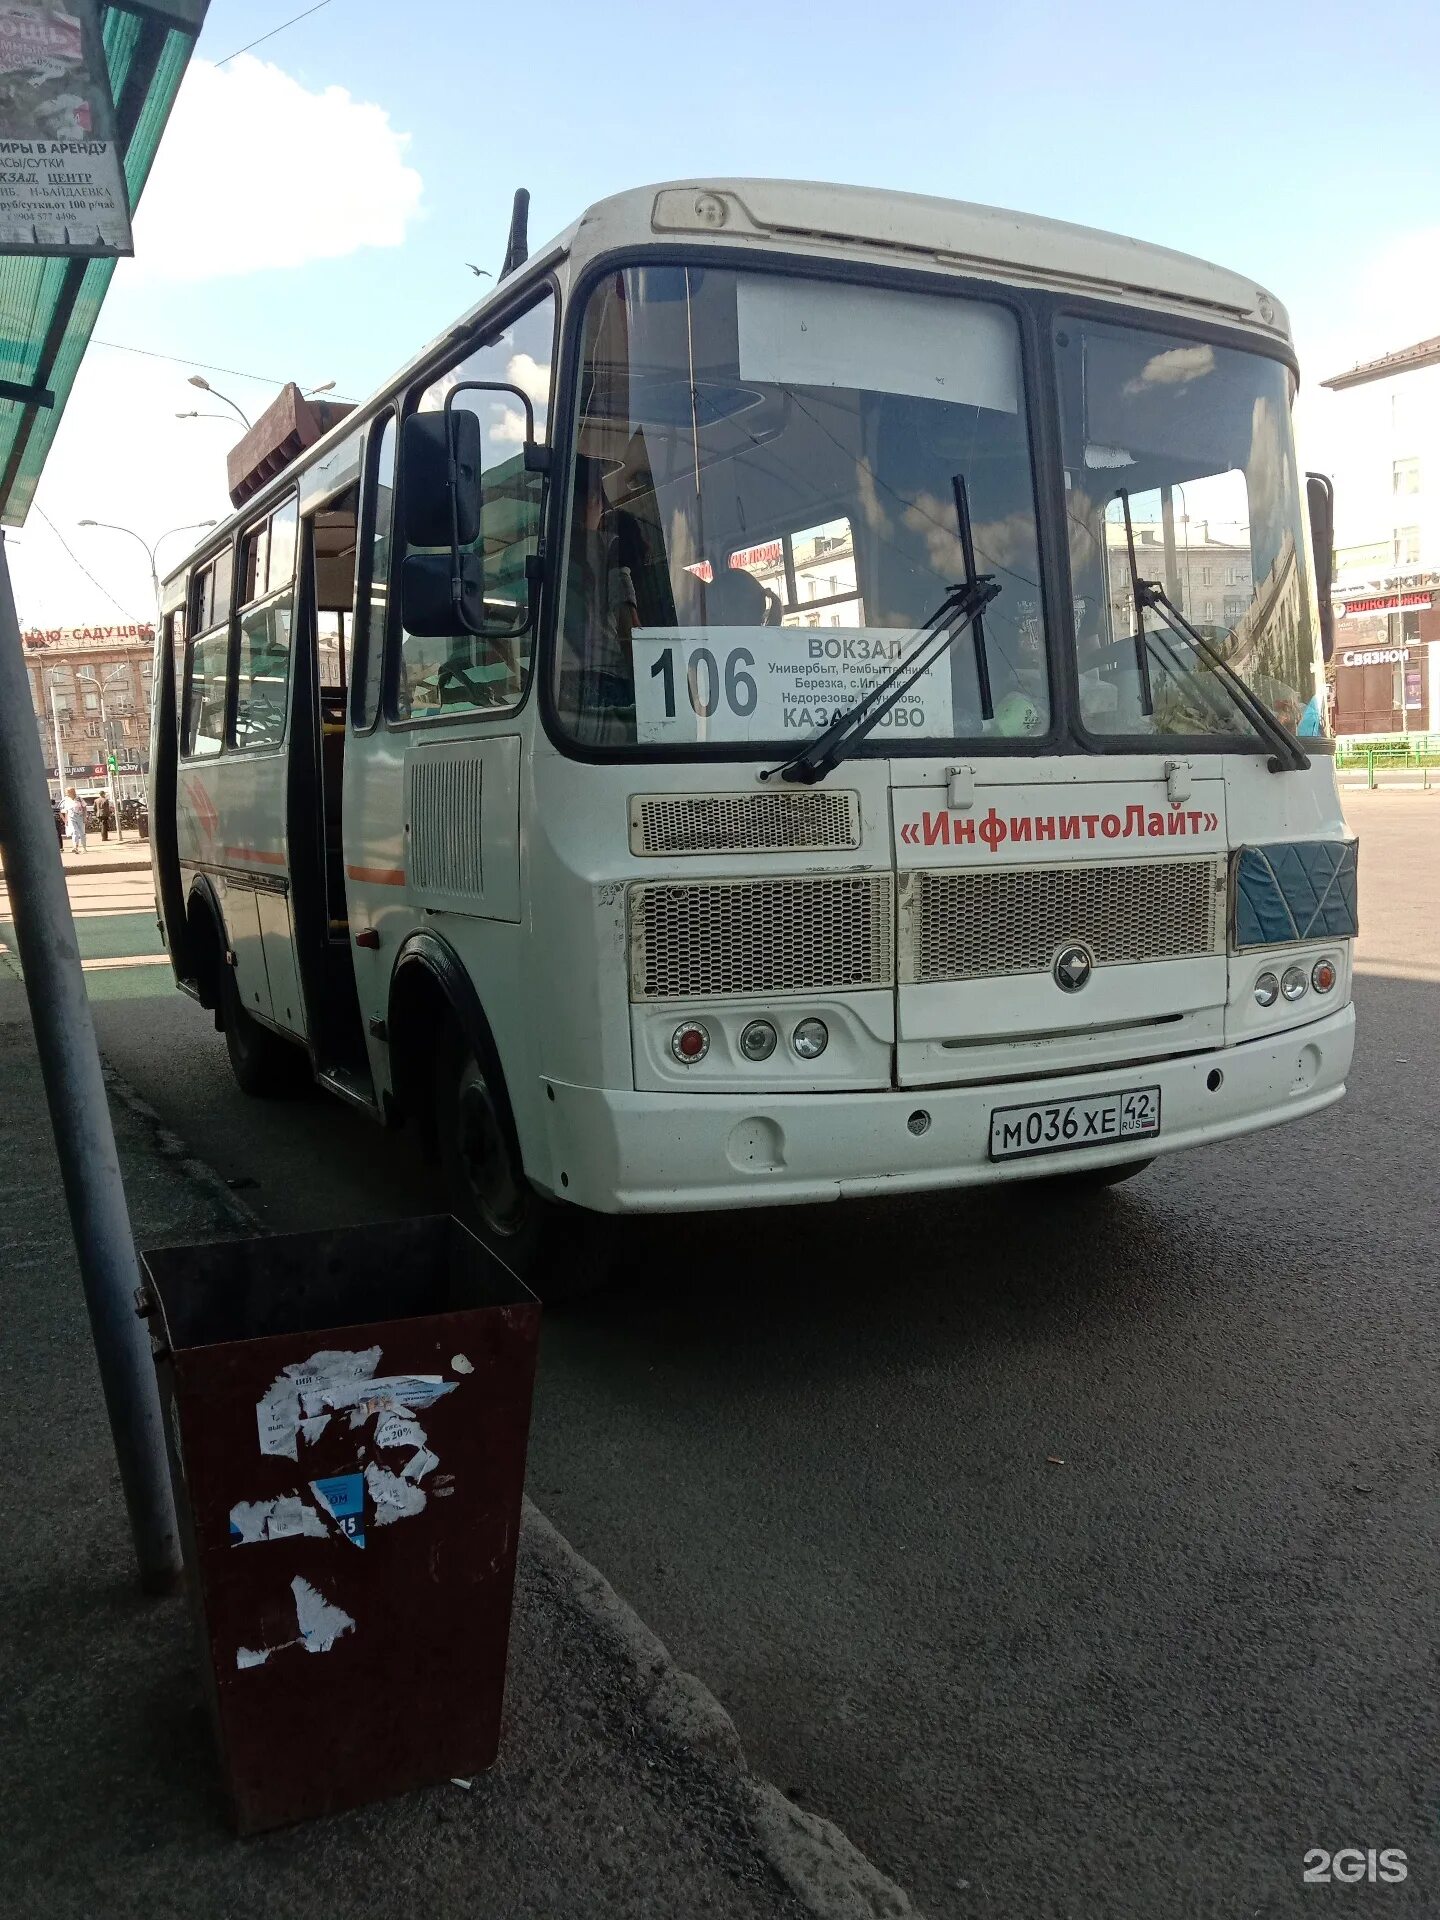 Автобус 106 Анапа. Автобус 132 Анапа. Новокузнецк автобус 106. Автобус 106 Анапа Благовещенская. Октябрьский б класс 106 автобус